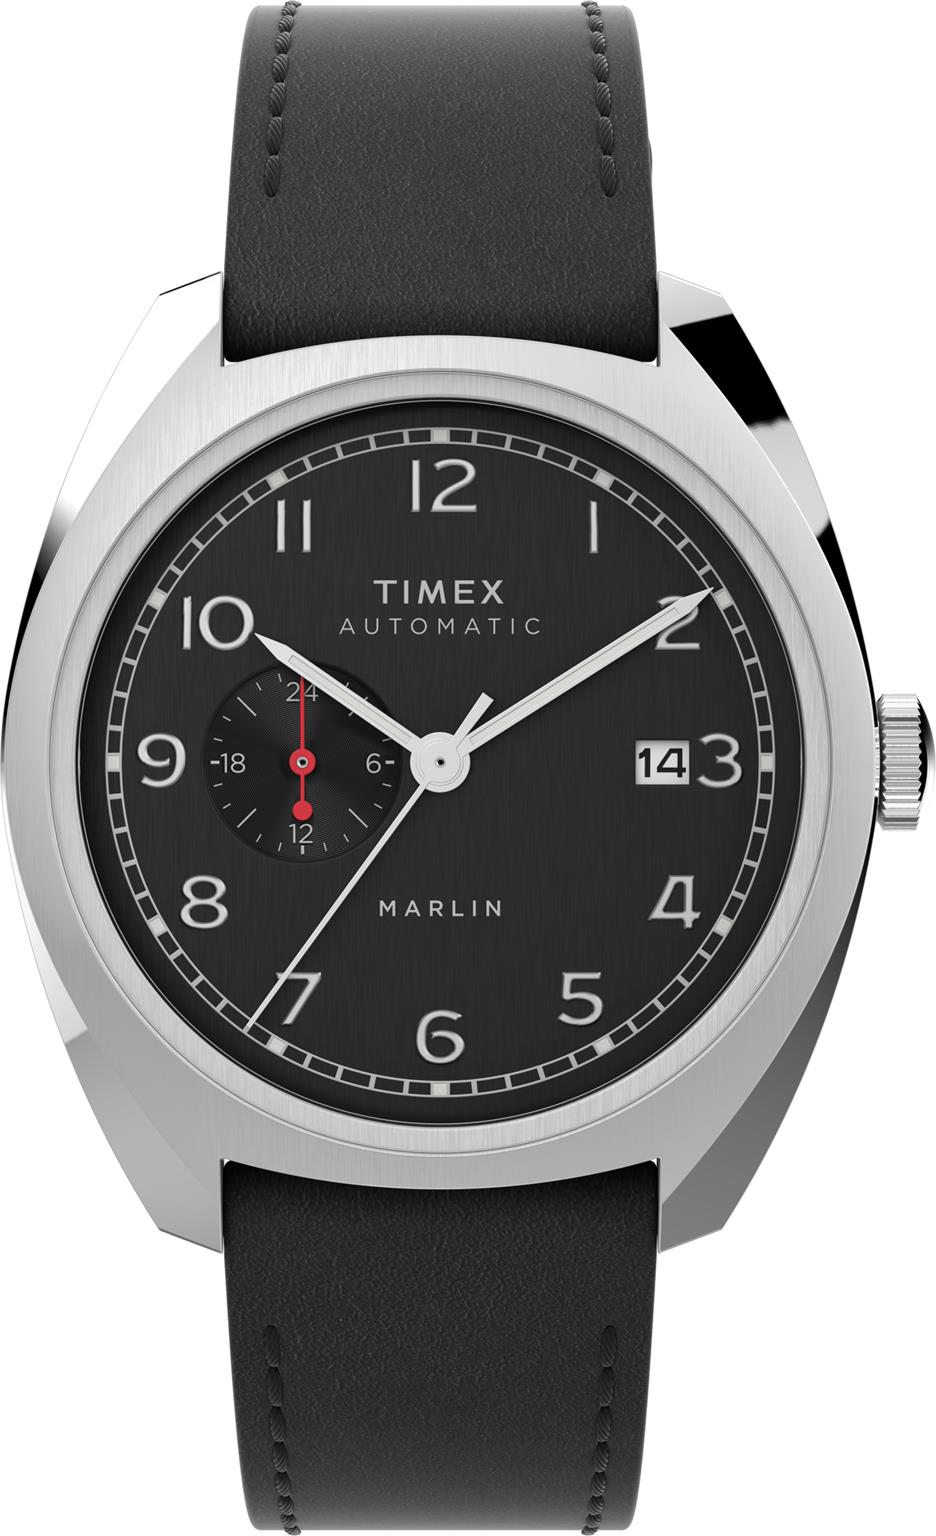 Timex - Marlin Automatic